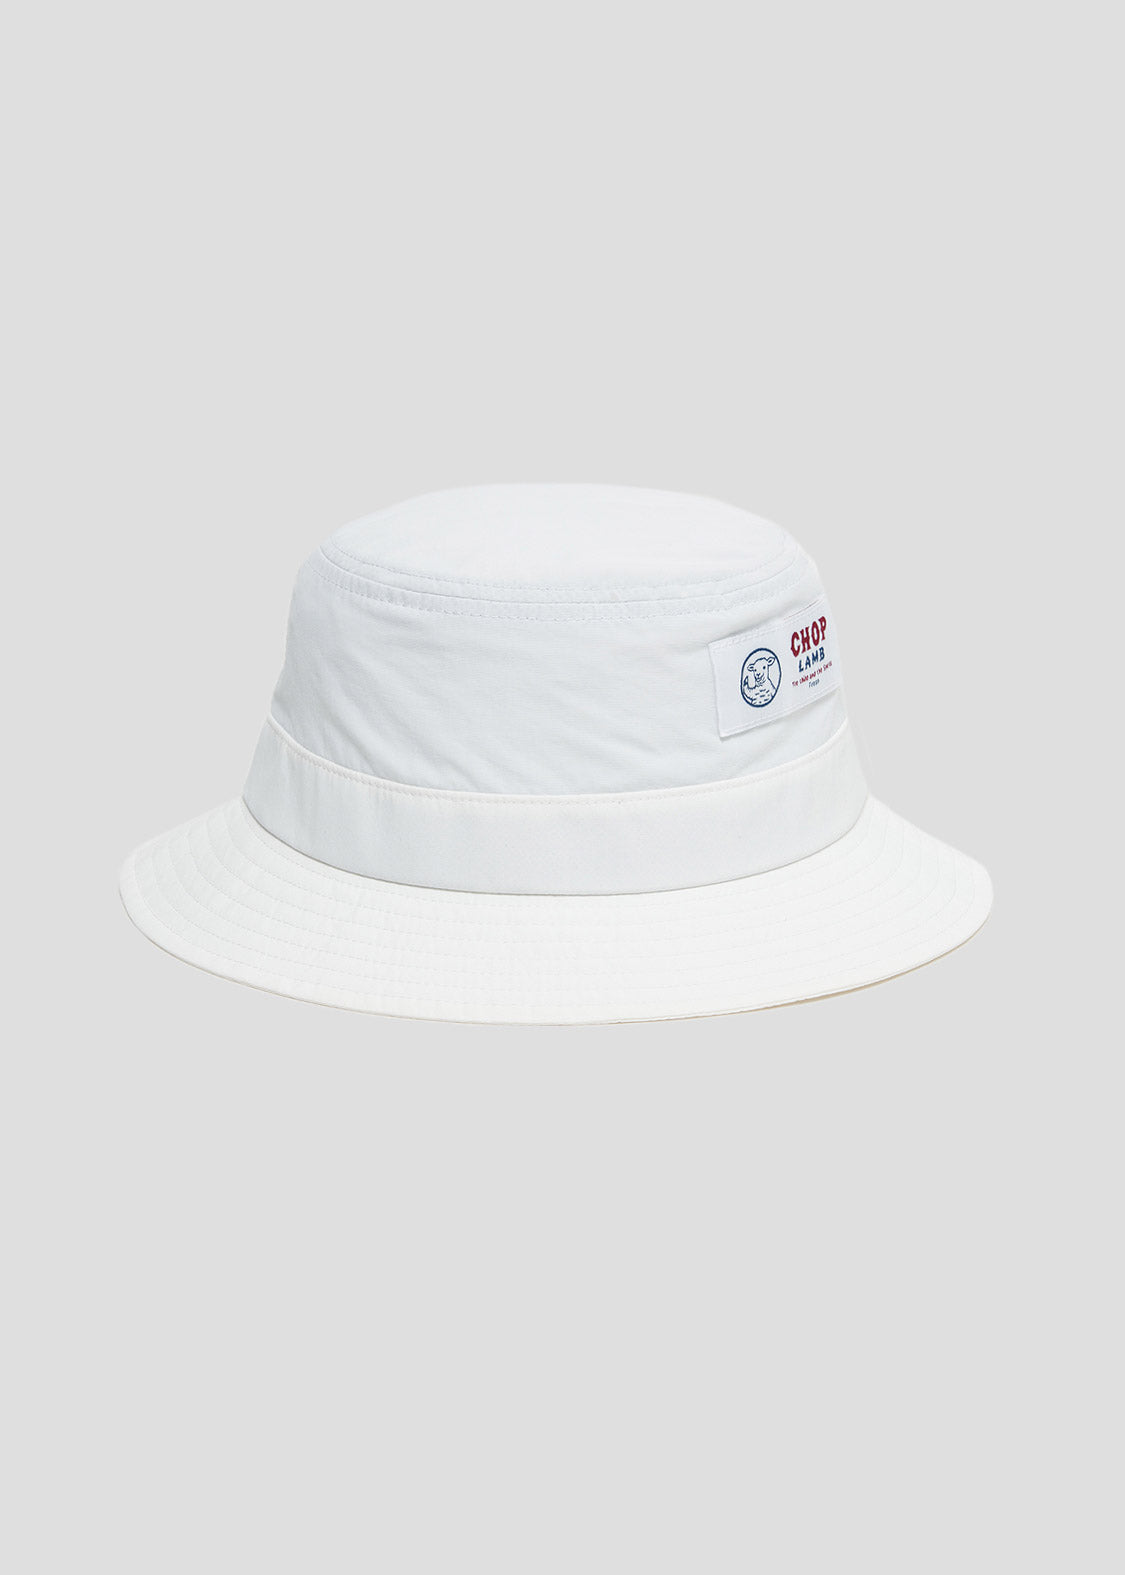 Bucket Hat (Lamb Chop LOGO)